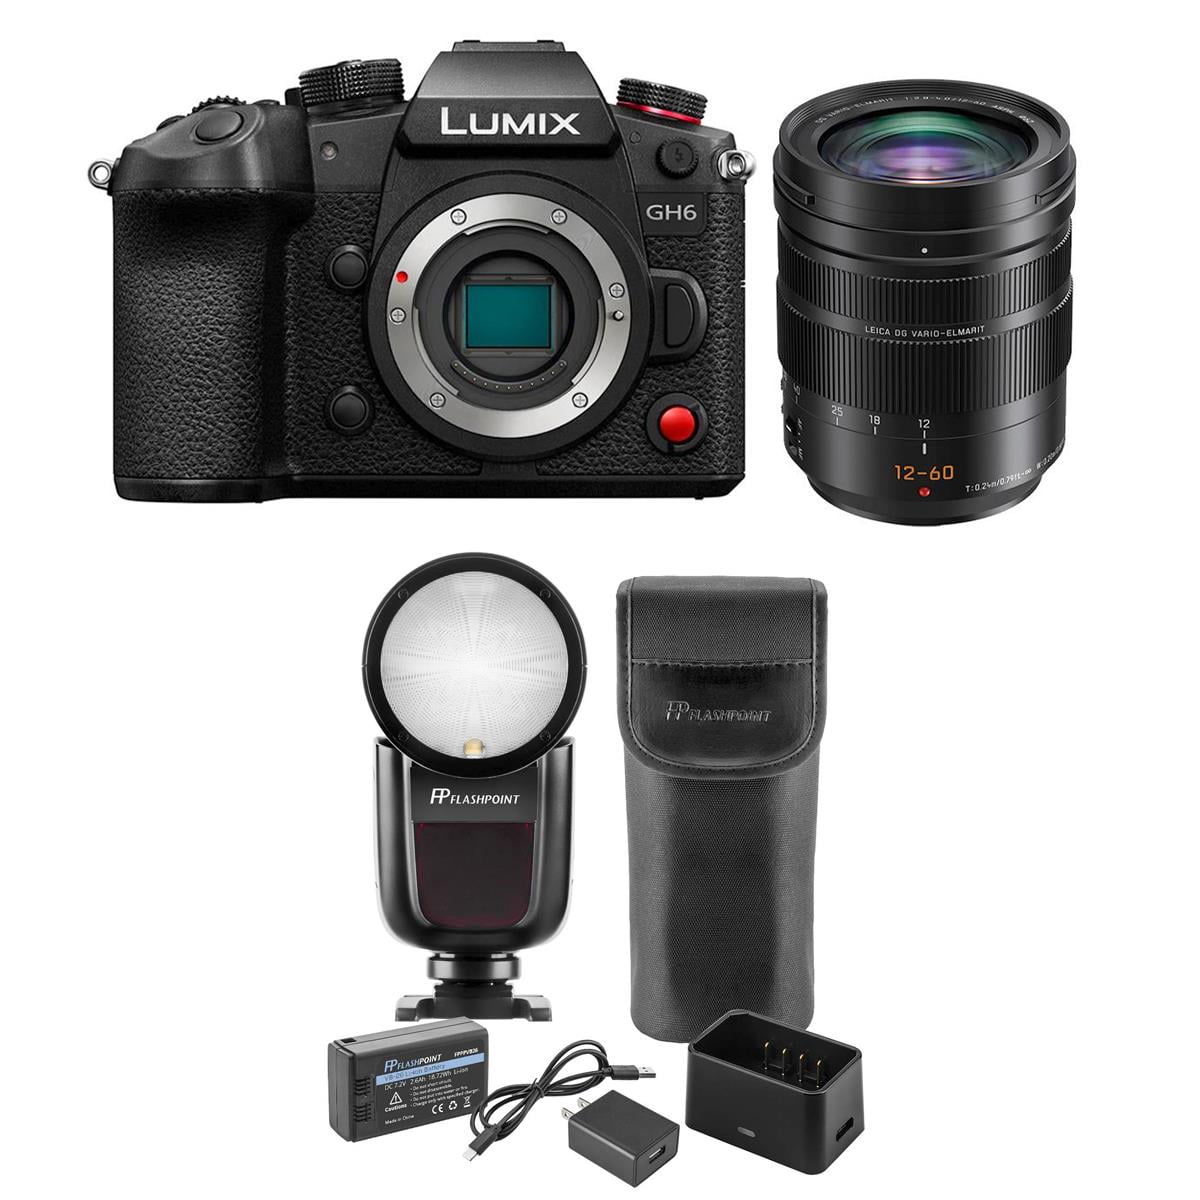 in de rij gaan staan mosterd Voorzieningen Panasonic Lumix GH6 Mirrorless Camera with Lumix G Leica DG Vario-Elmarit  12-60mm f/2.8-4.0 Aspherical Lens, Bundle with Flashpoint Zoom Li-on X R2  TT - Walmart.com